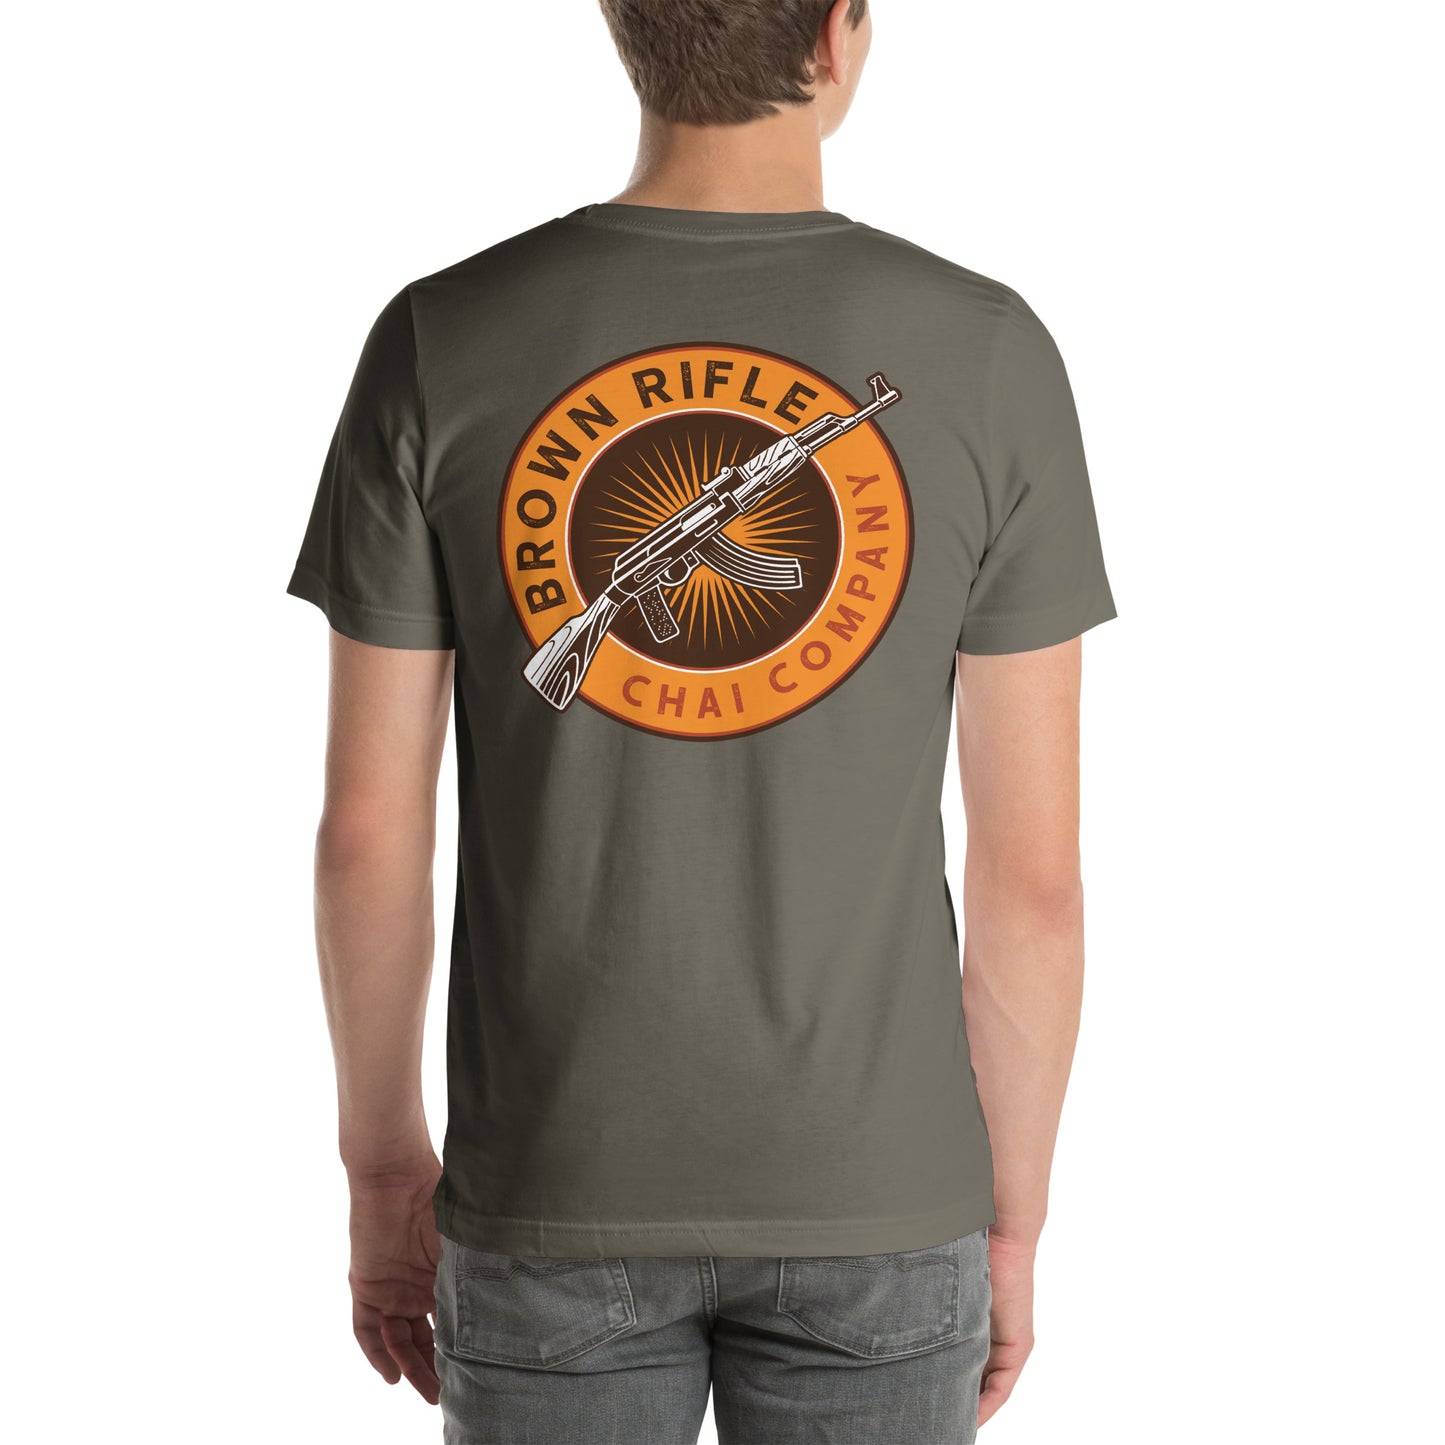 Men's Brown Rifle Chai Company shirt